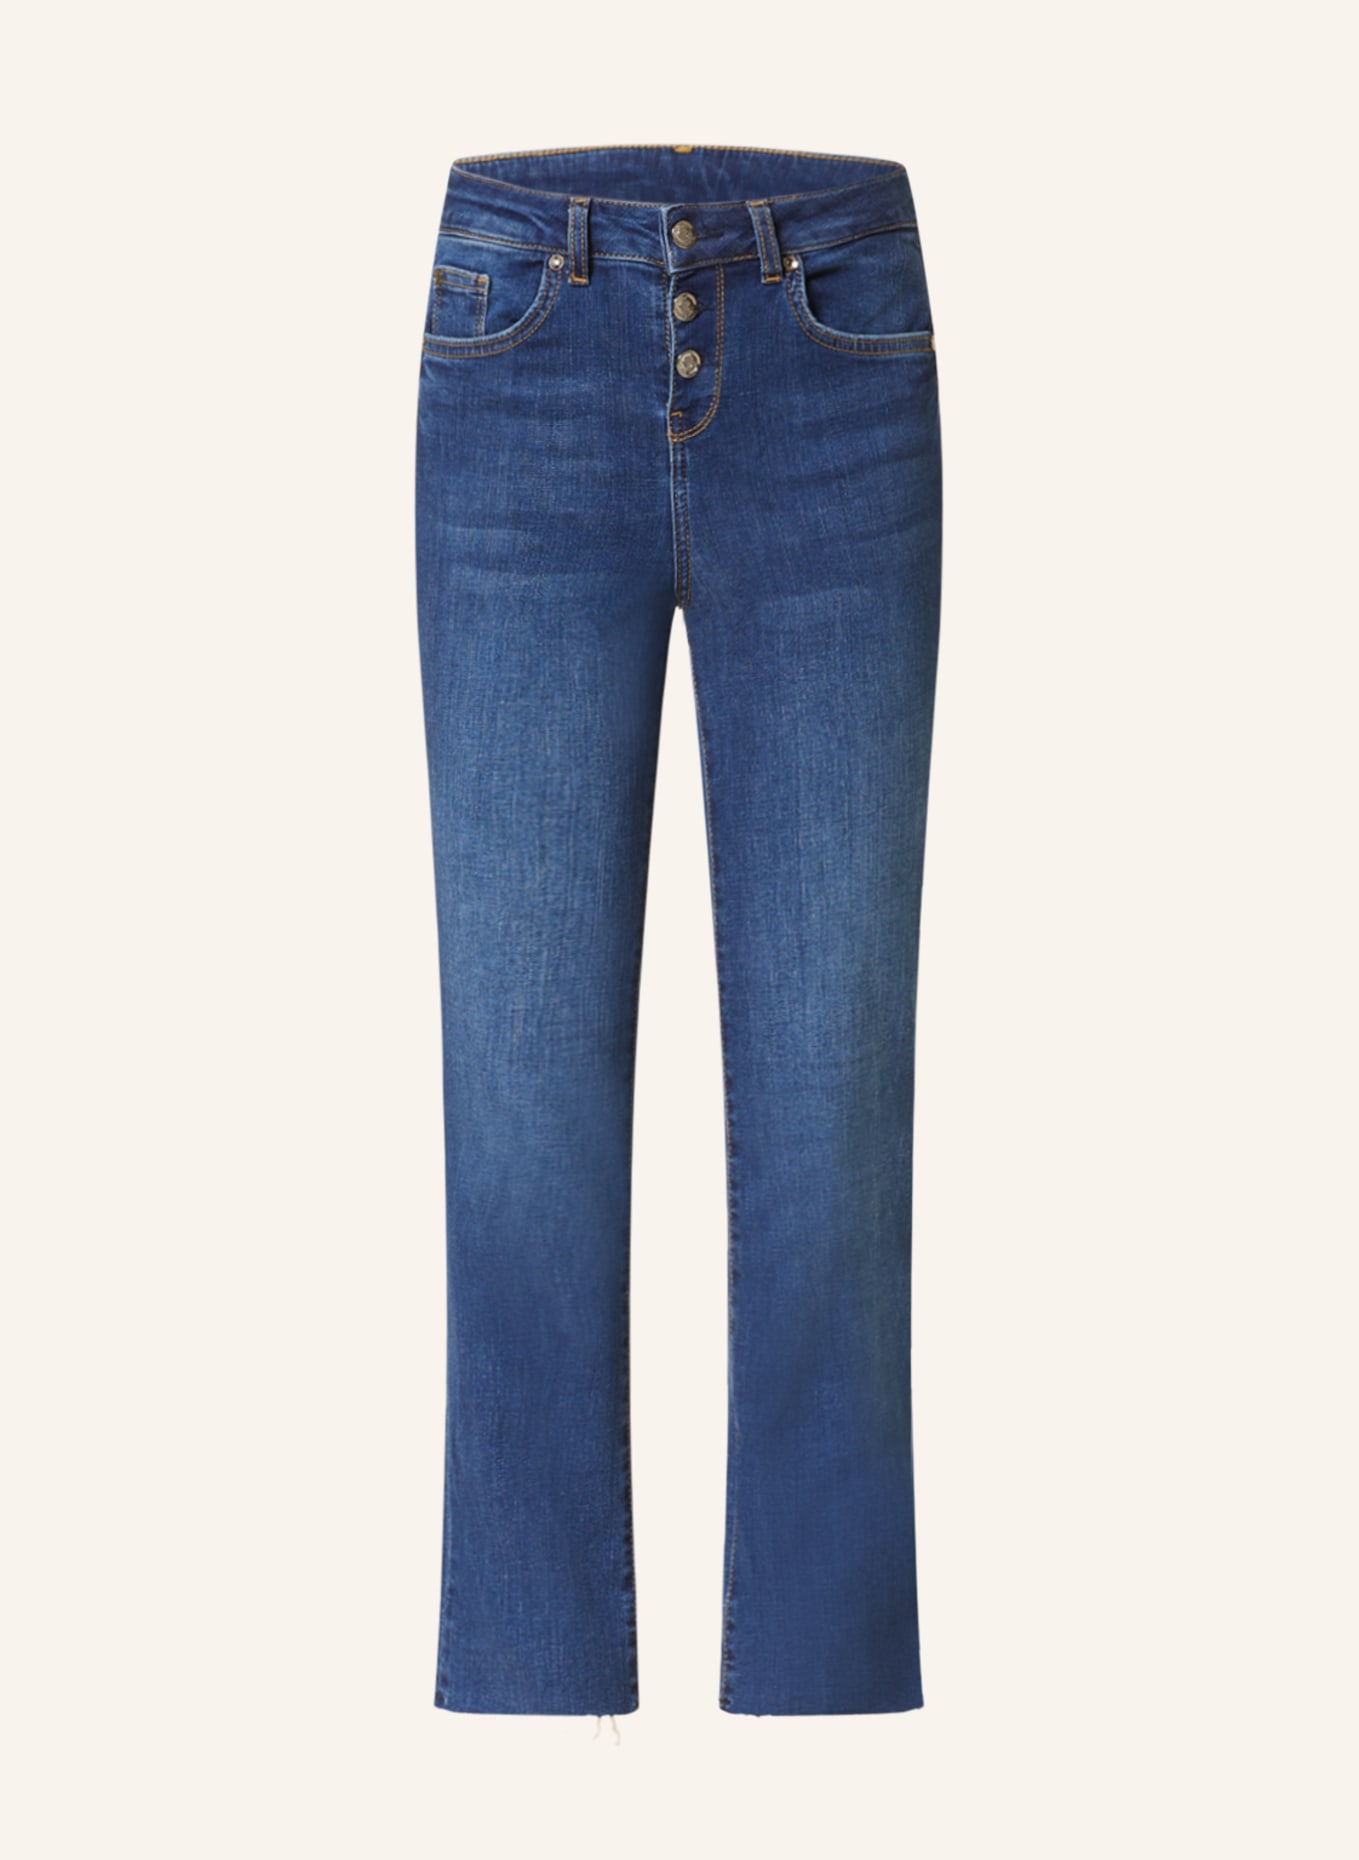 LIU JO Jeans, Farbe: 78525 Den.Blue dk match wa (Bild 1)